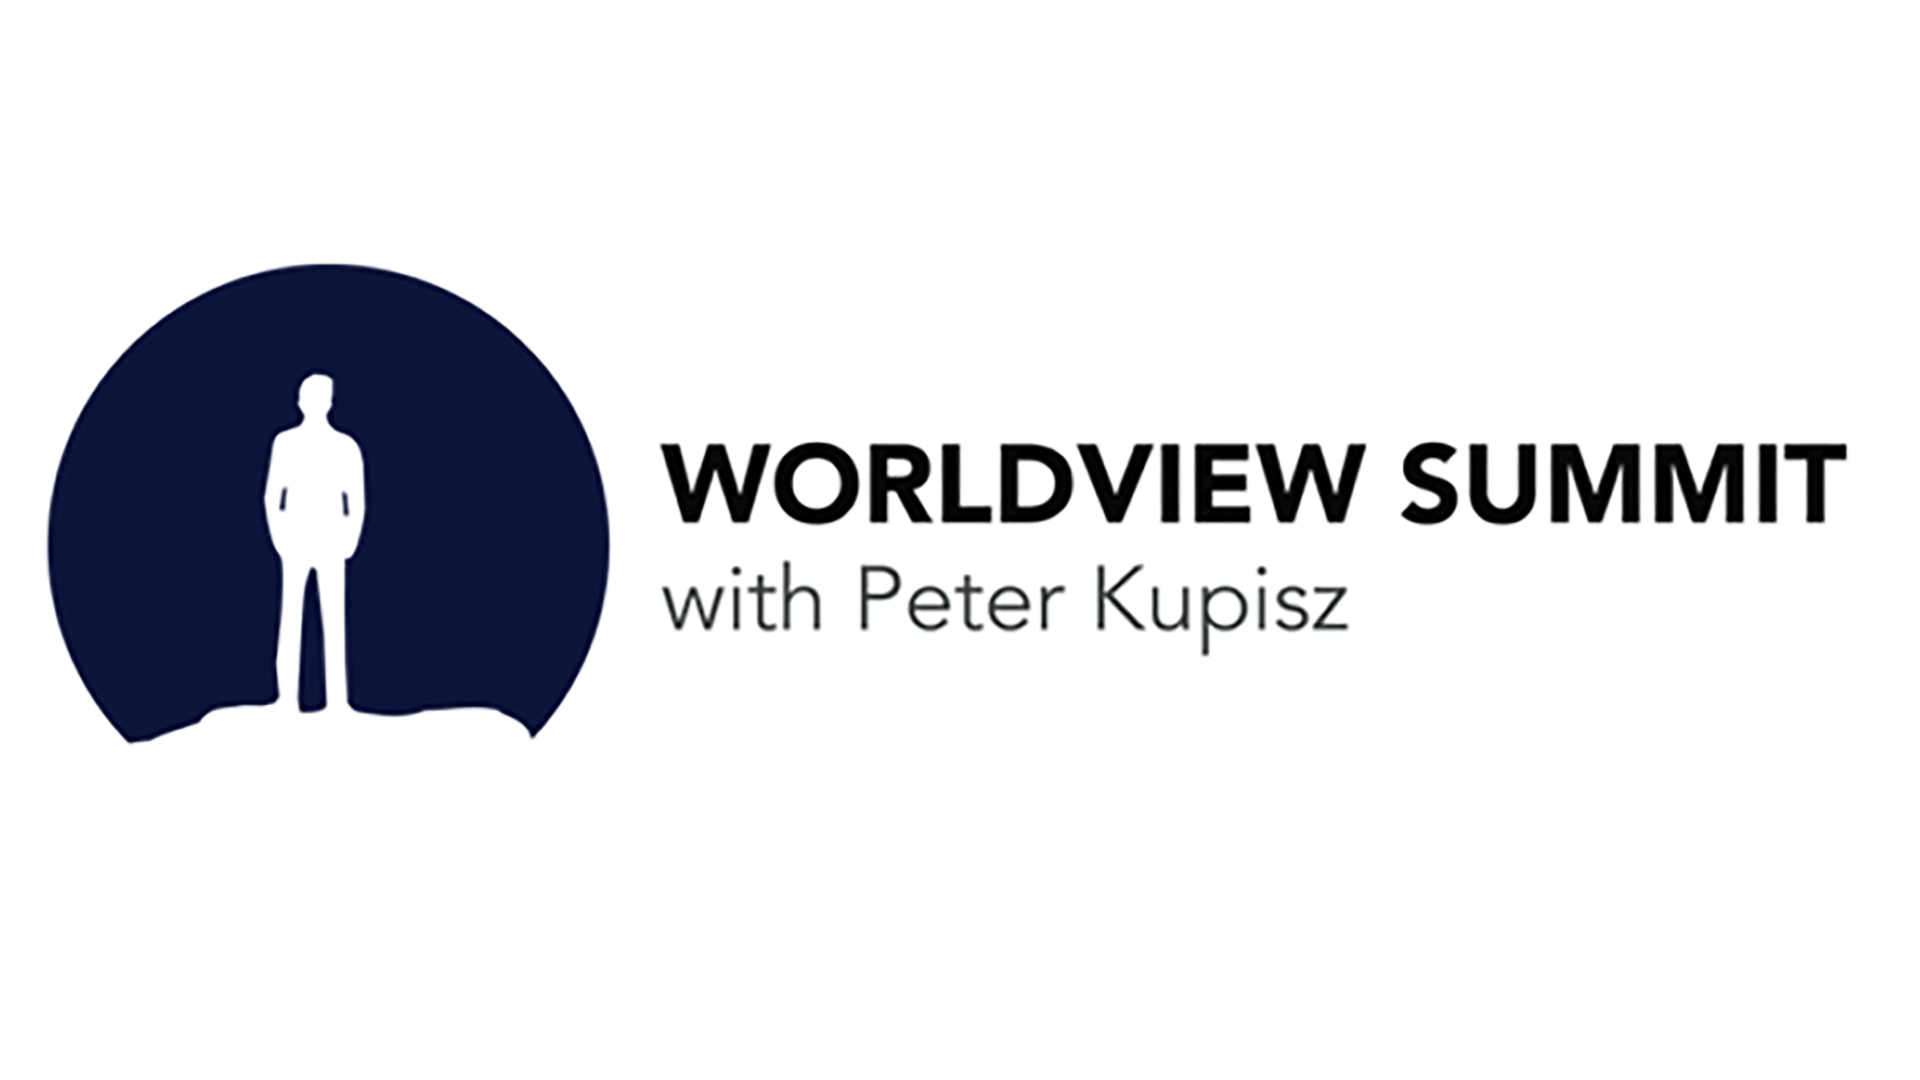 Worldview Summit logo